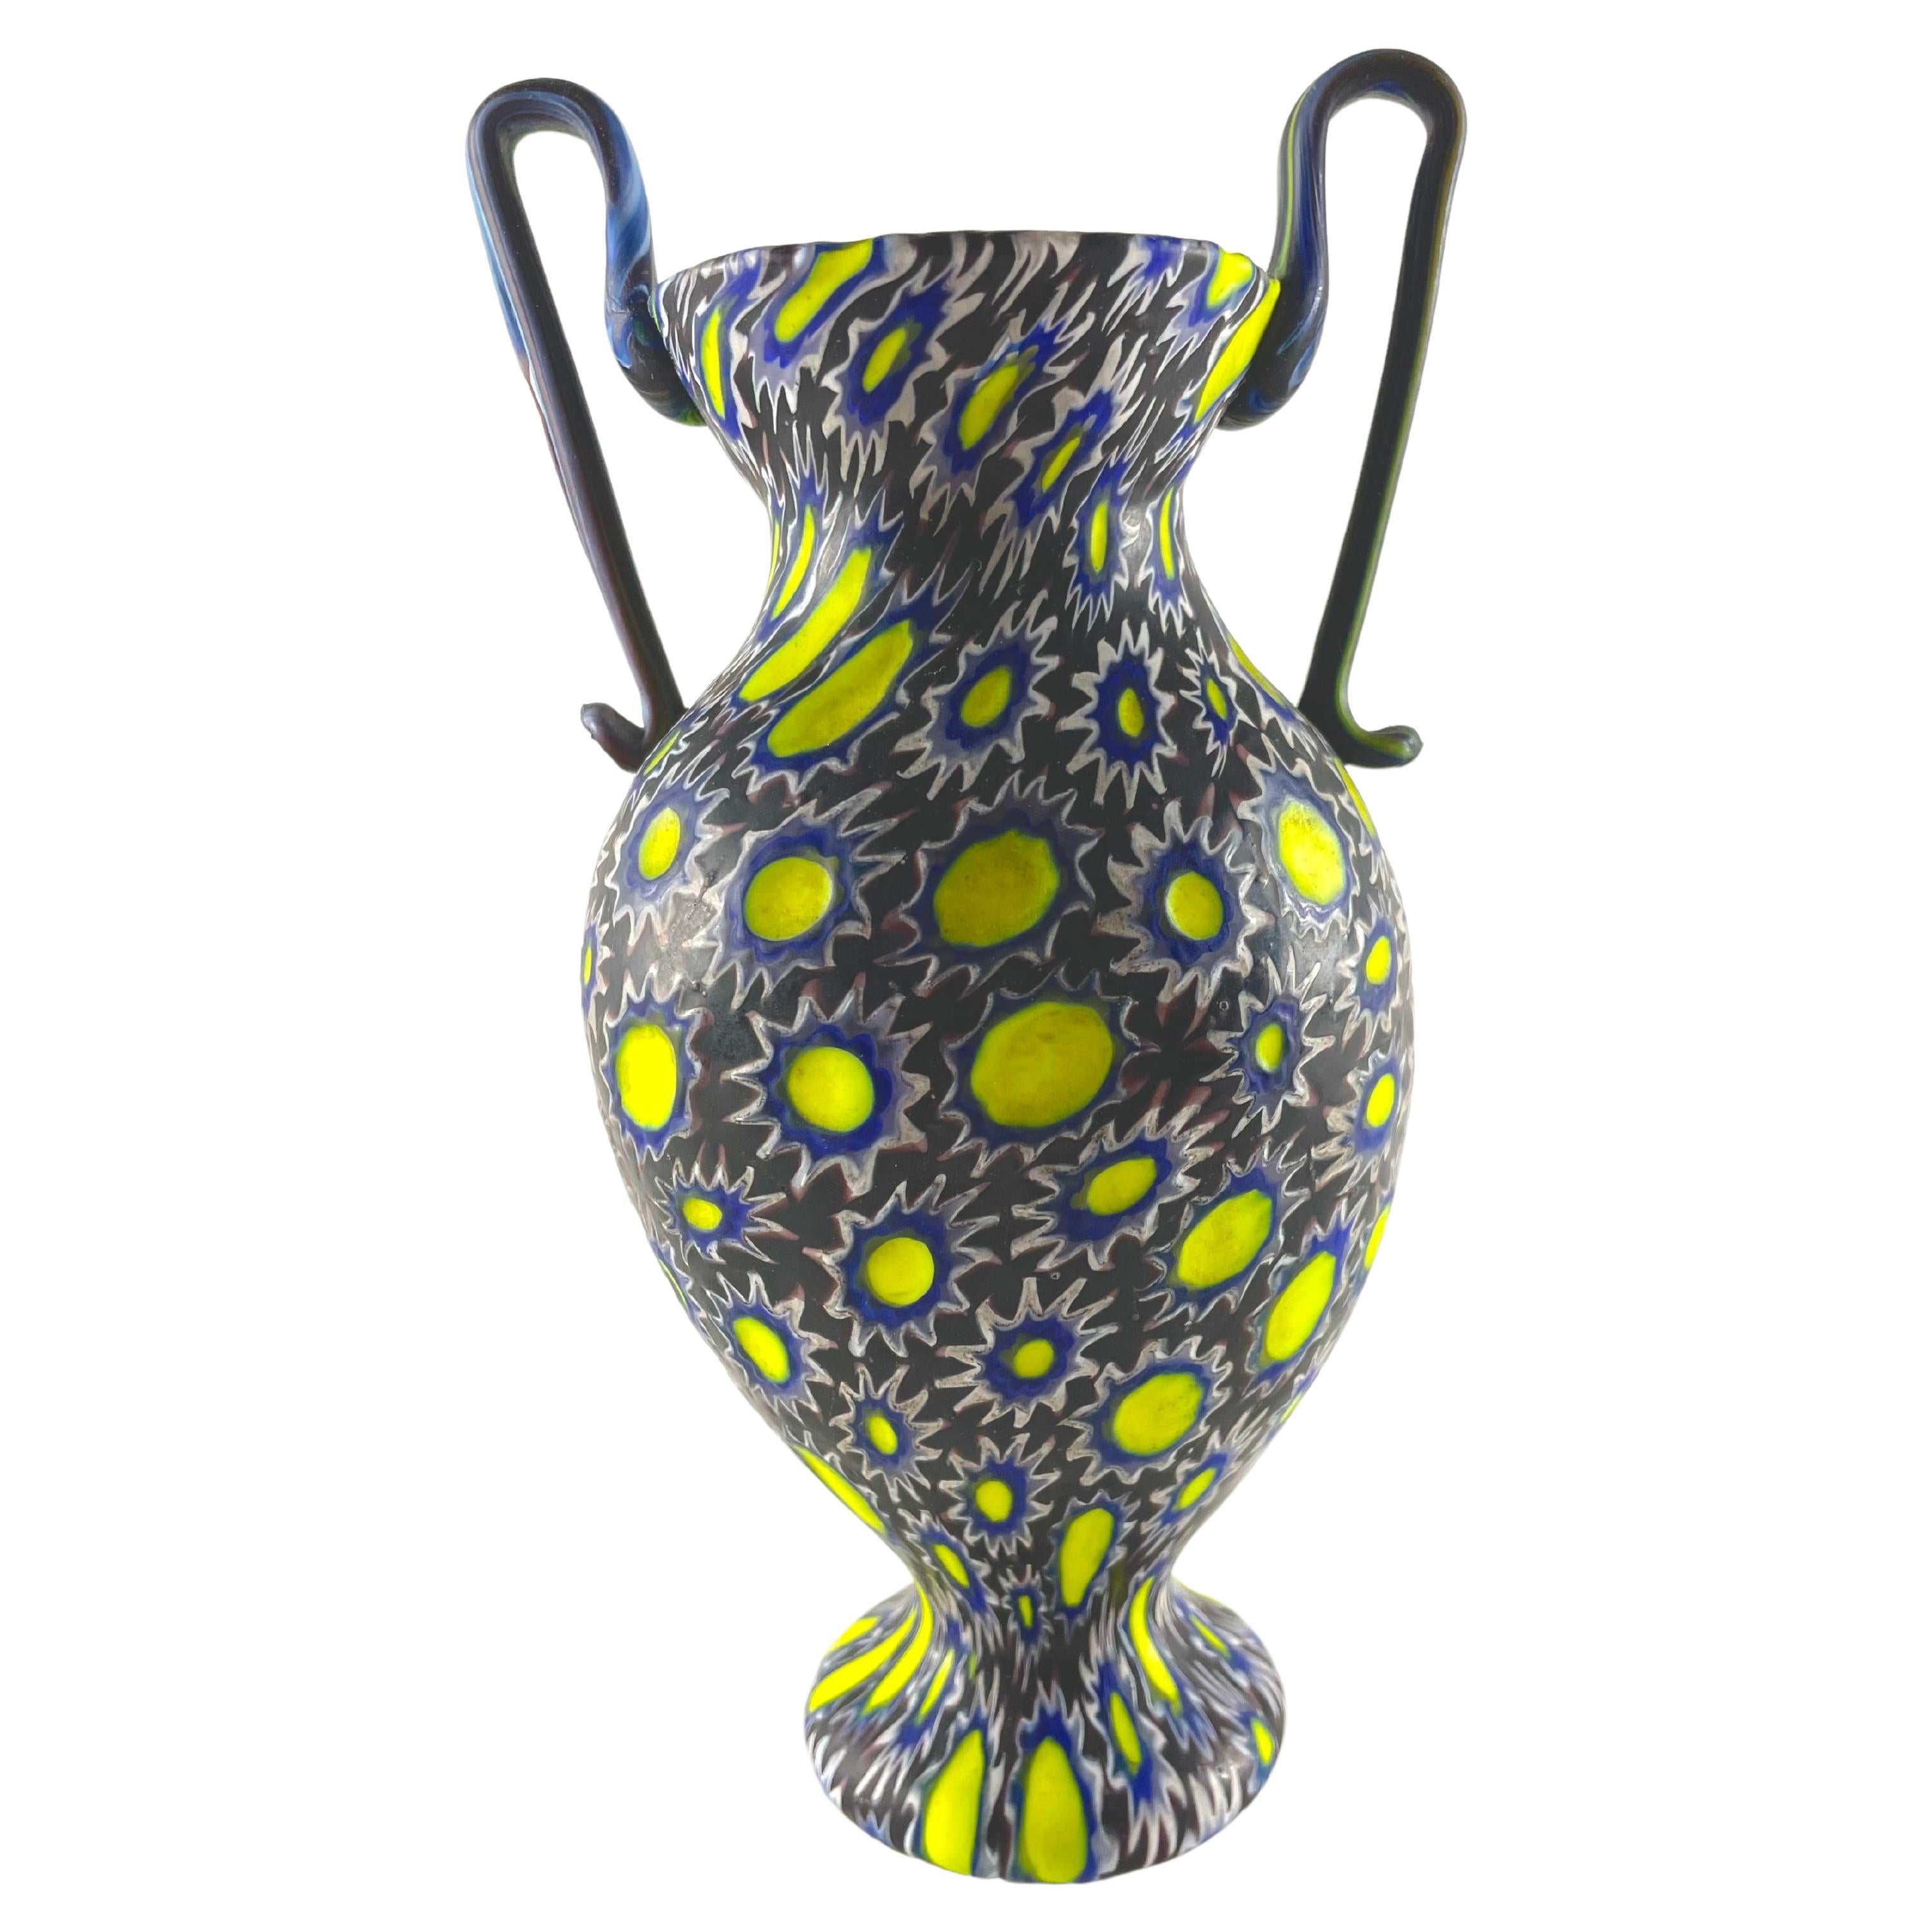 Vase aus dunklem Murrina, hellgelb, FRATELLI TOSO MURANO, um 1950